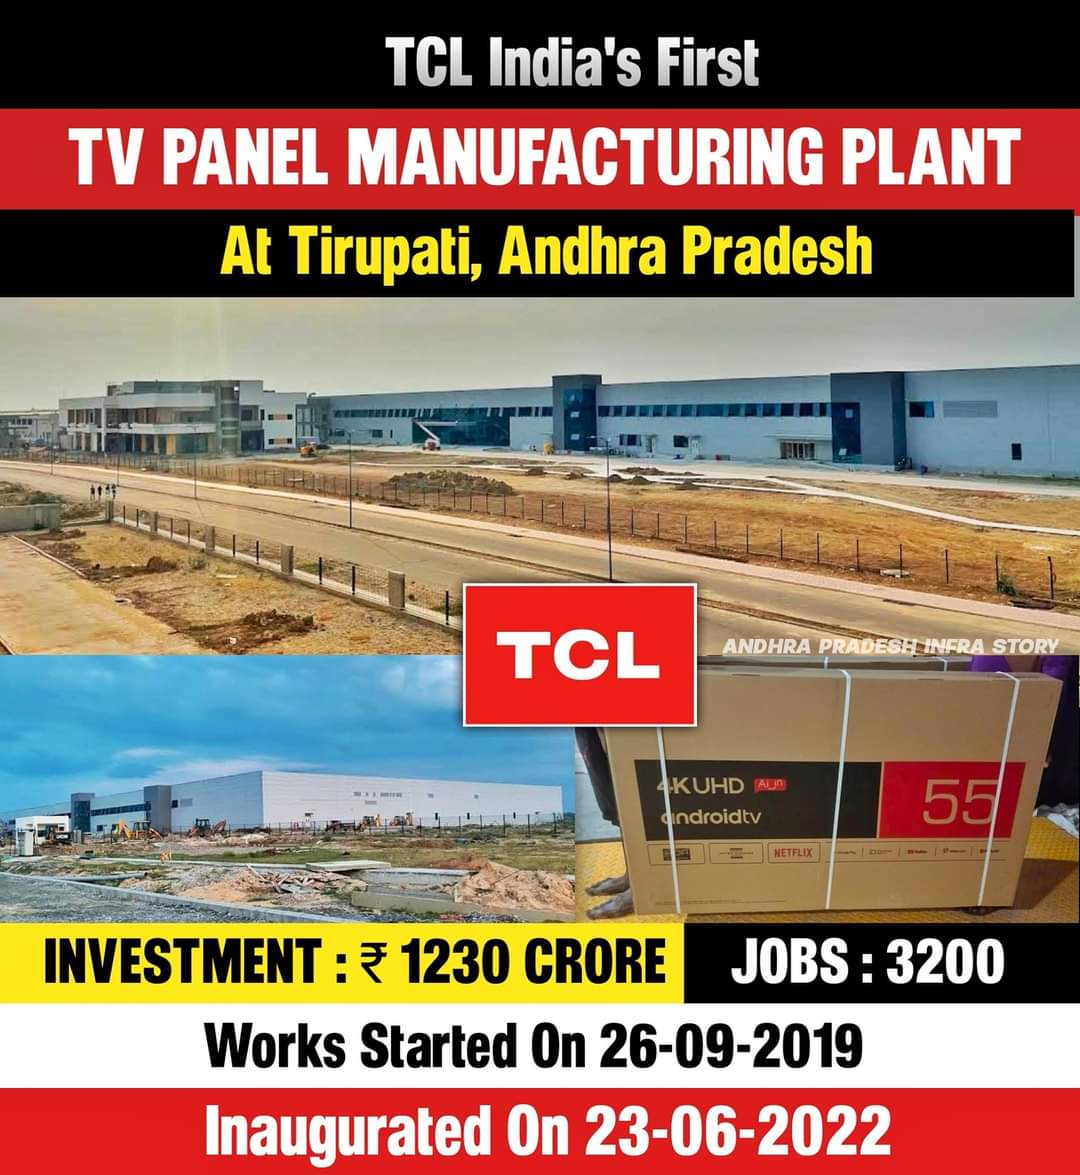 🔸 Tirupati Emerging As A Electronics Manufacturing Hub 😍 

#AndhraPradesh #TCL #TVManufacturing #Tirupati #AdvantageAP #APInfraStory #YSJaganDevelopsAP #YSRCPSocialMediaKanigiri